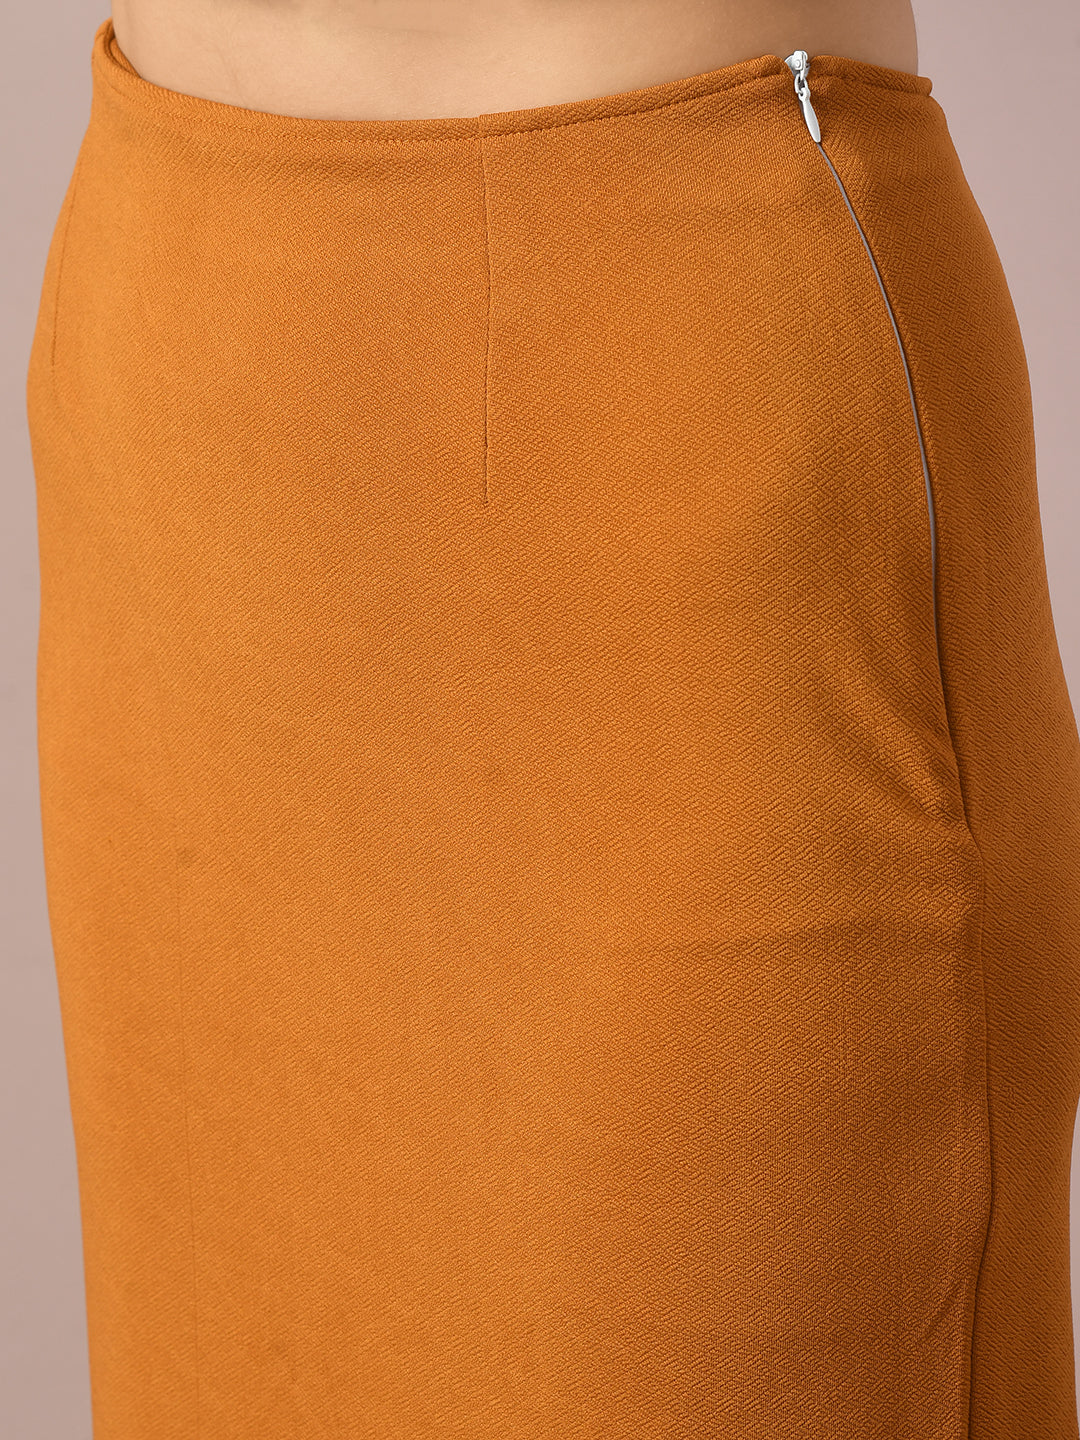 Women's  Mustard Solid Knee Length Party Embellished Skirts   - Myshka